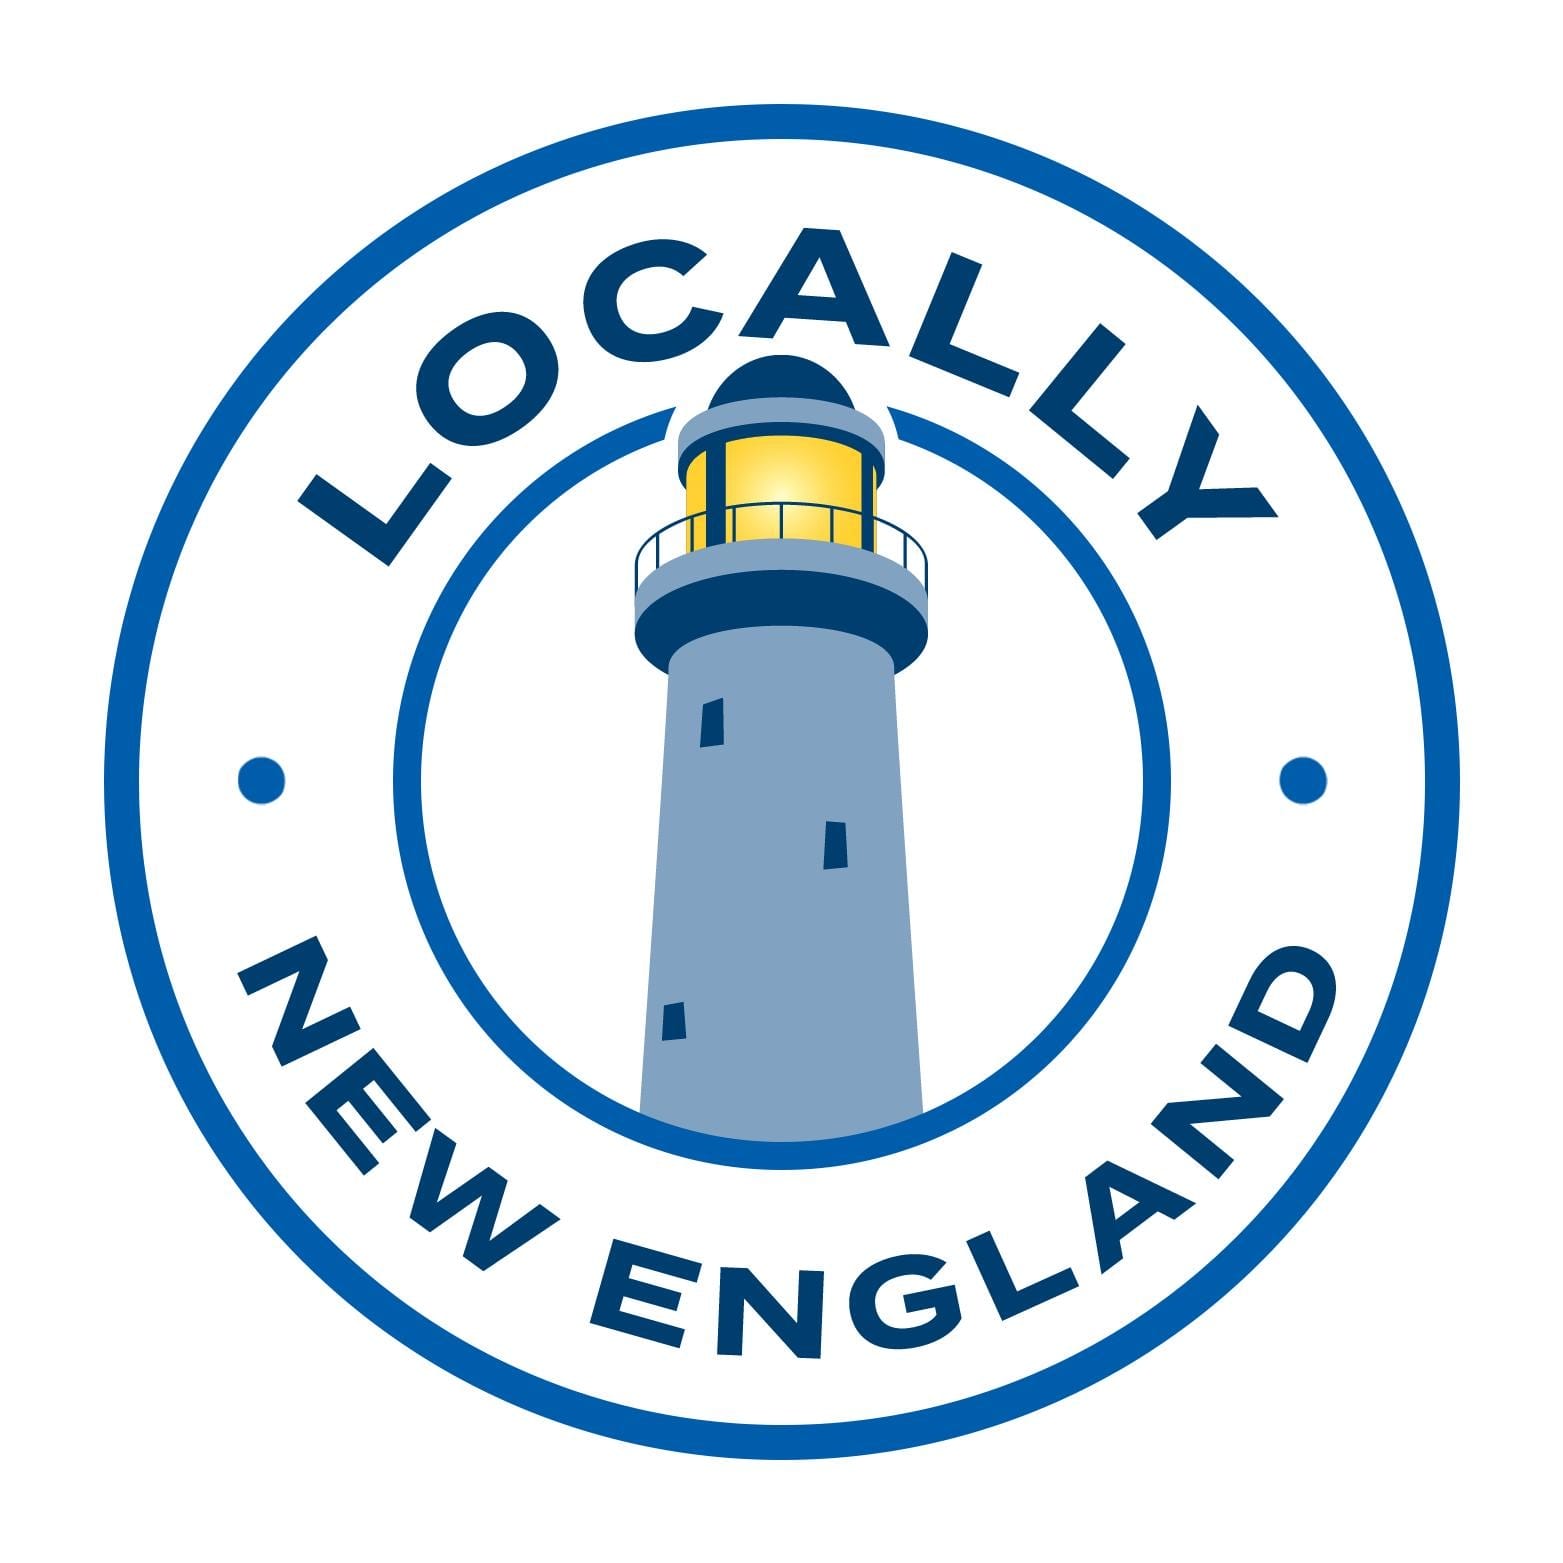 Locally New England Image